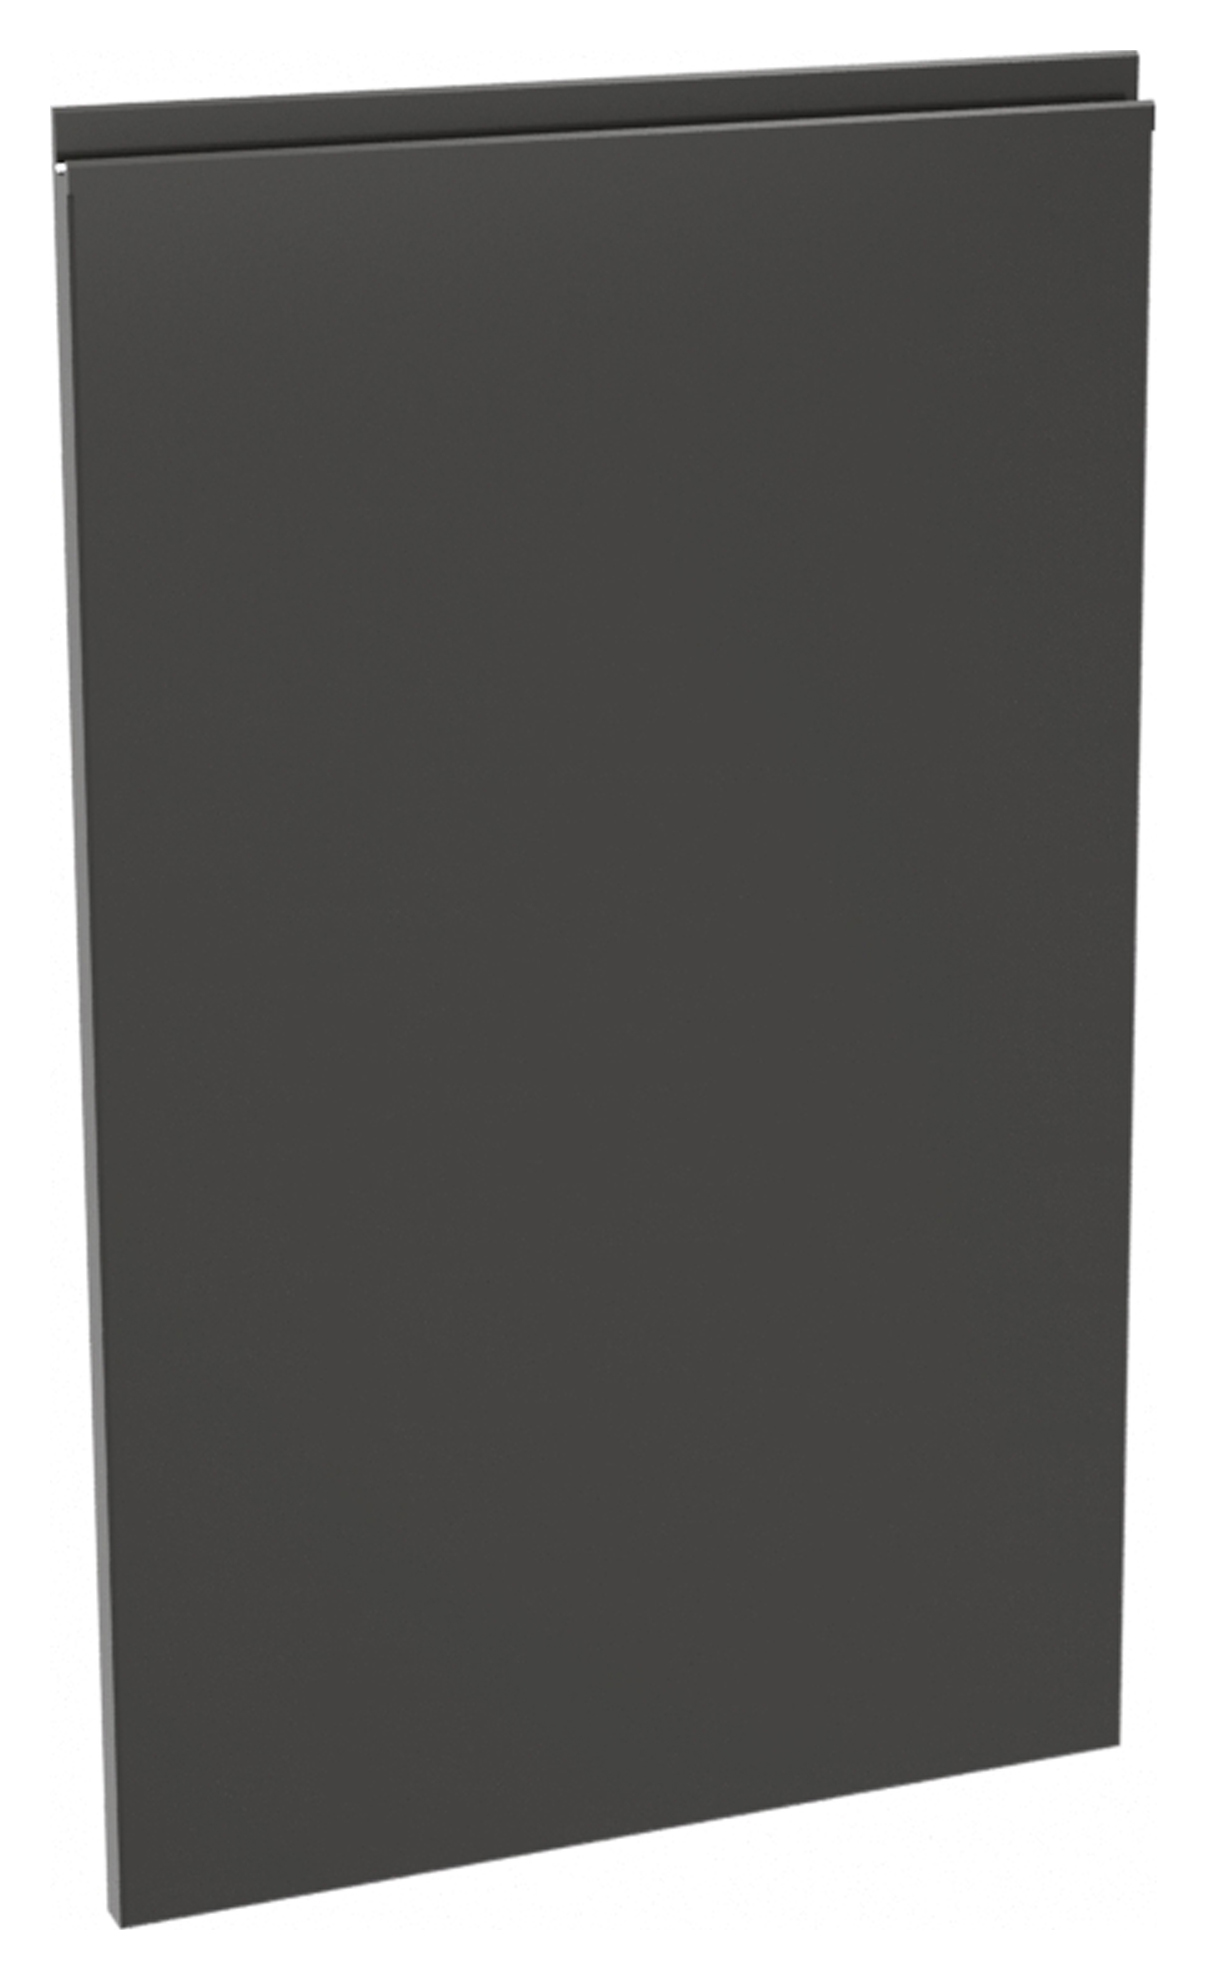 Wickes Madison Dark Grey Fascia Board - 450 x 731mm